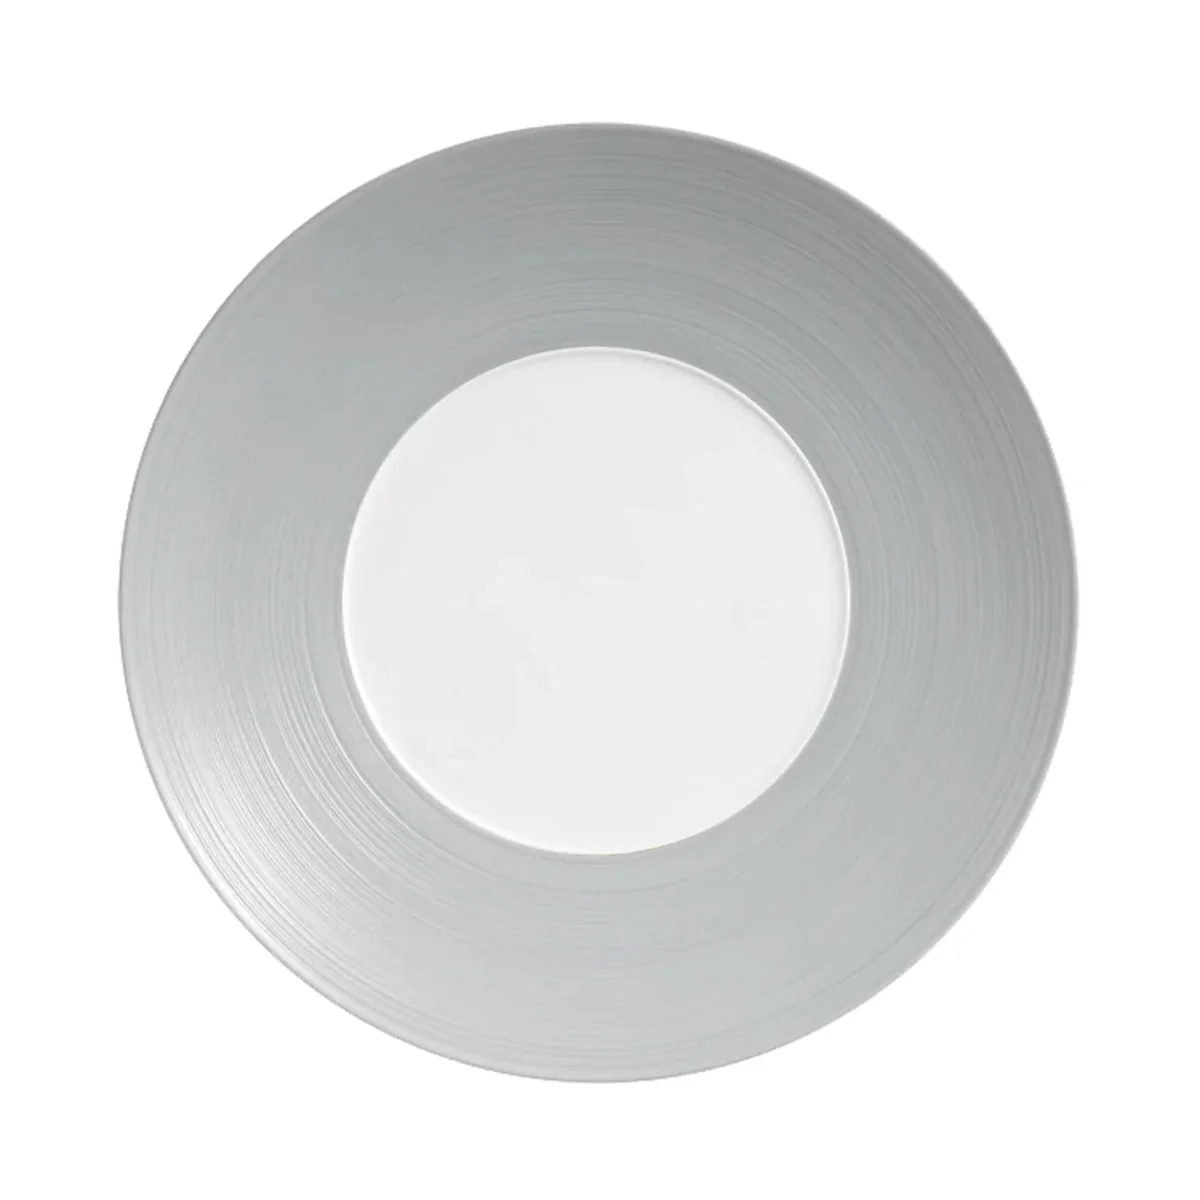 HEMISPHERE Grey - 29 cm plate